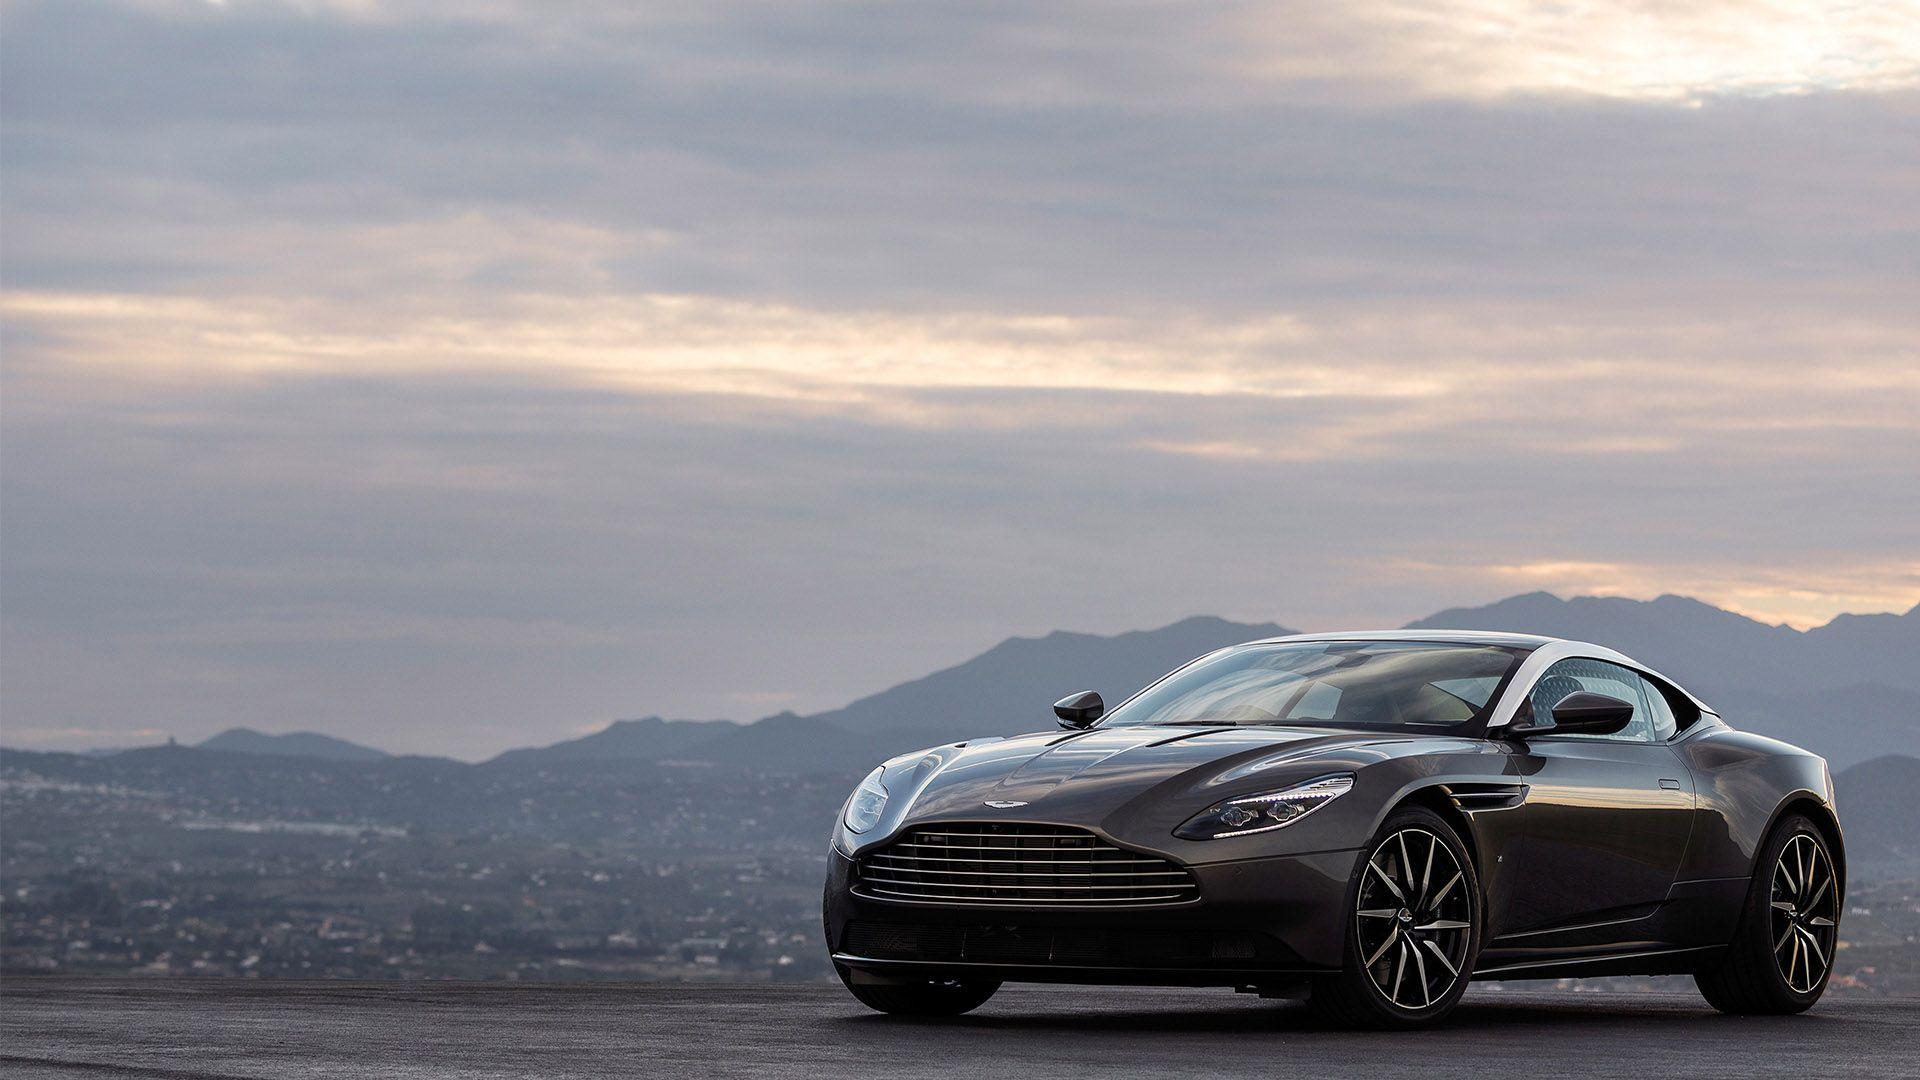 Aston Martin DB11 Lease Deals & Prices